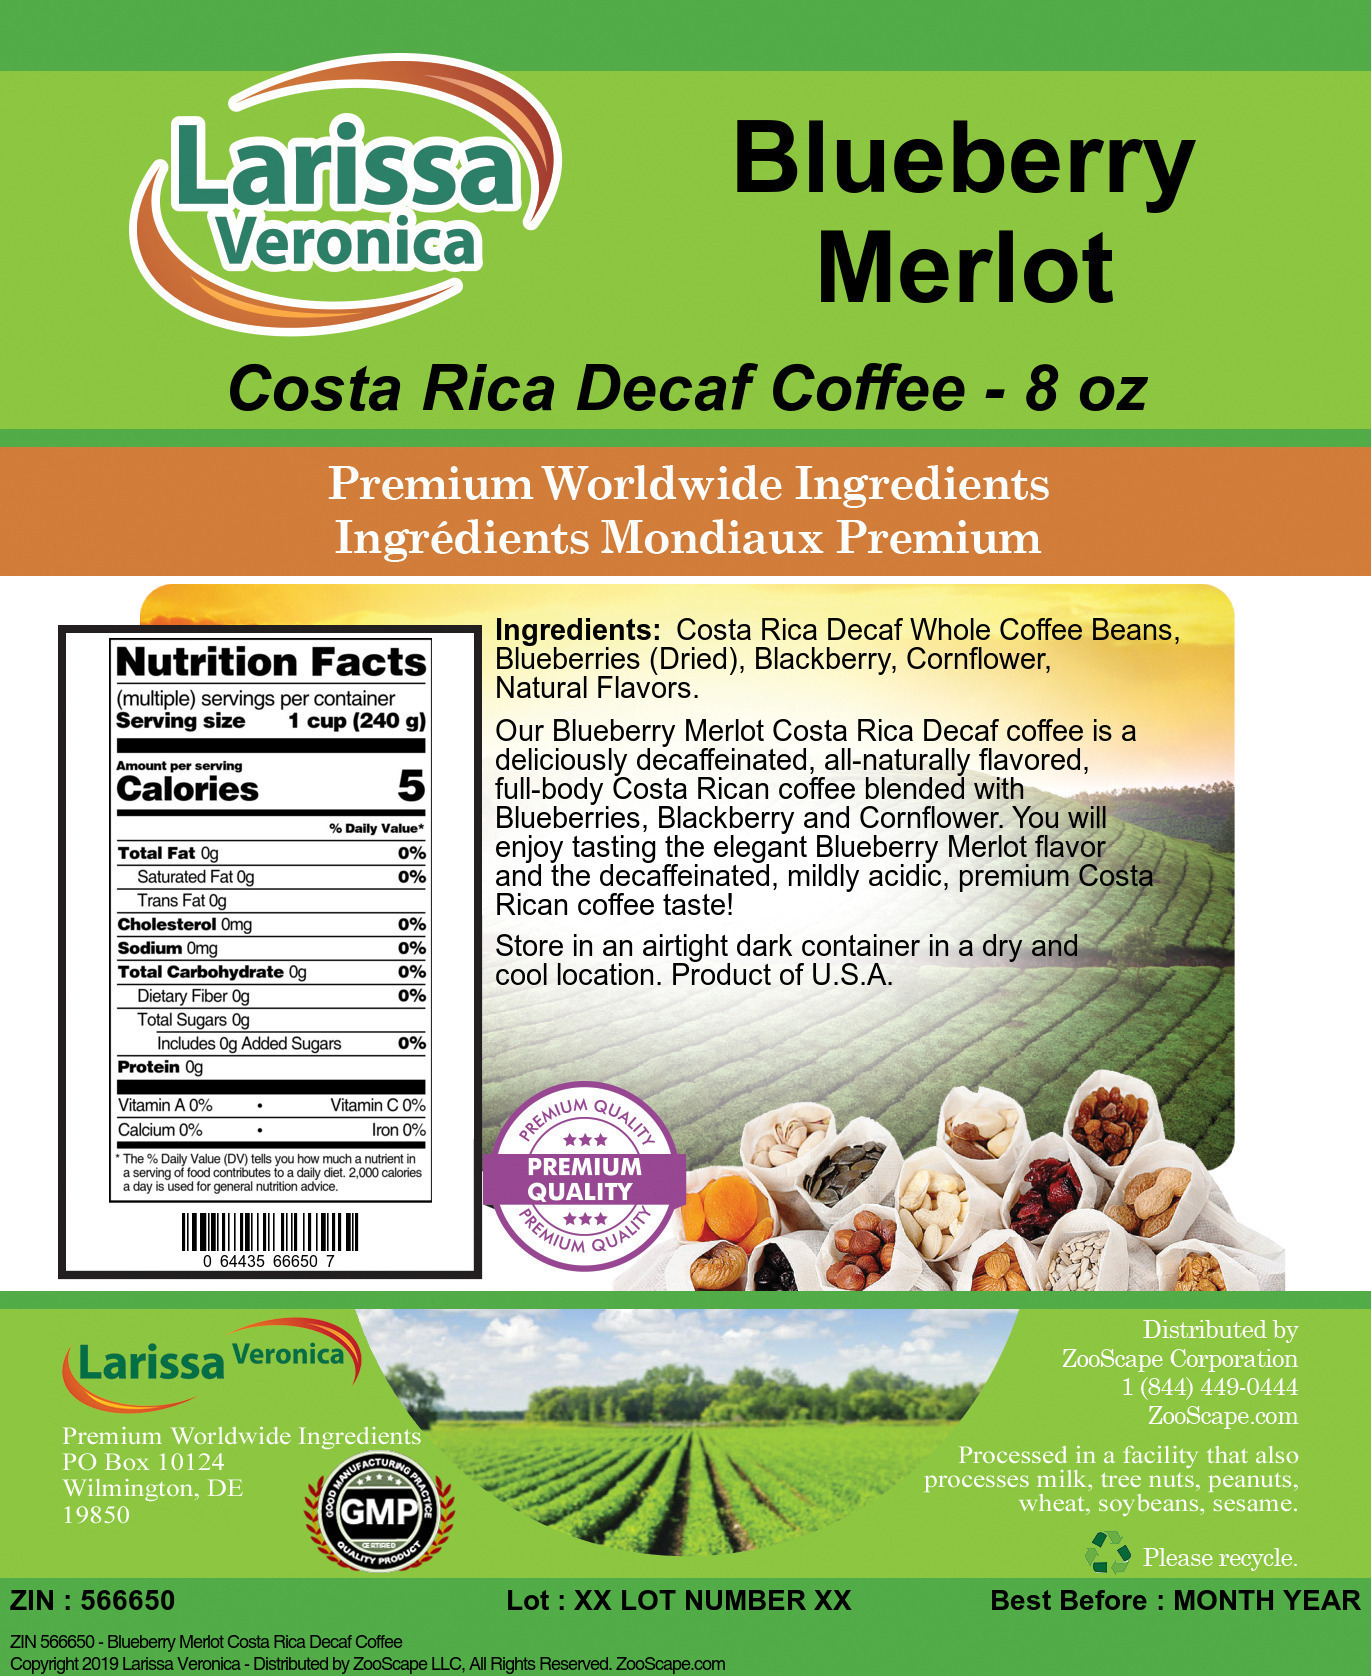 Blueberry Merlot Costa Rica Decaf Coffee - Label